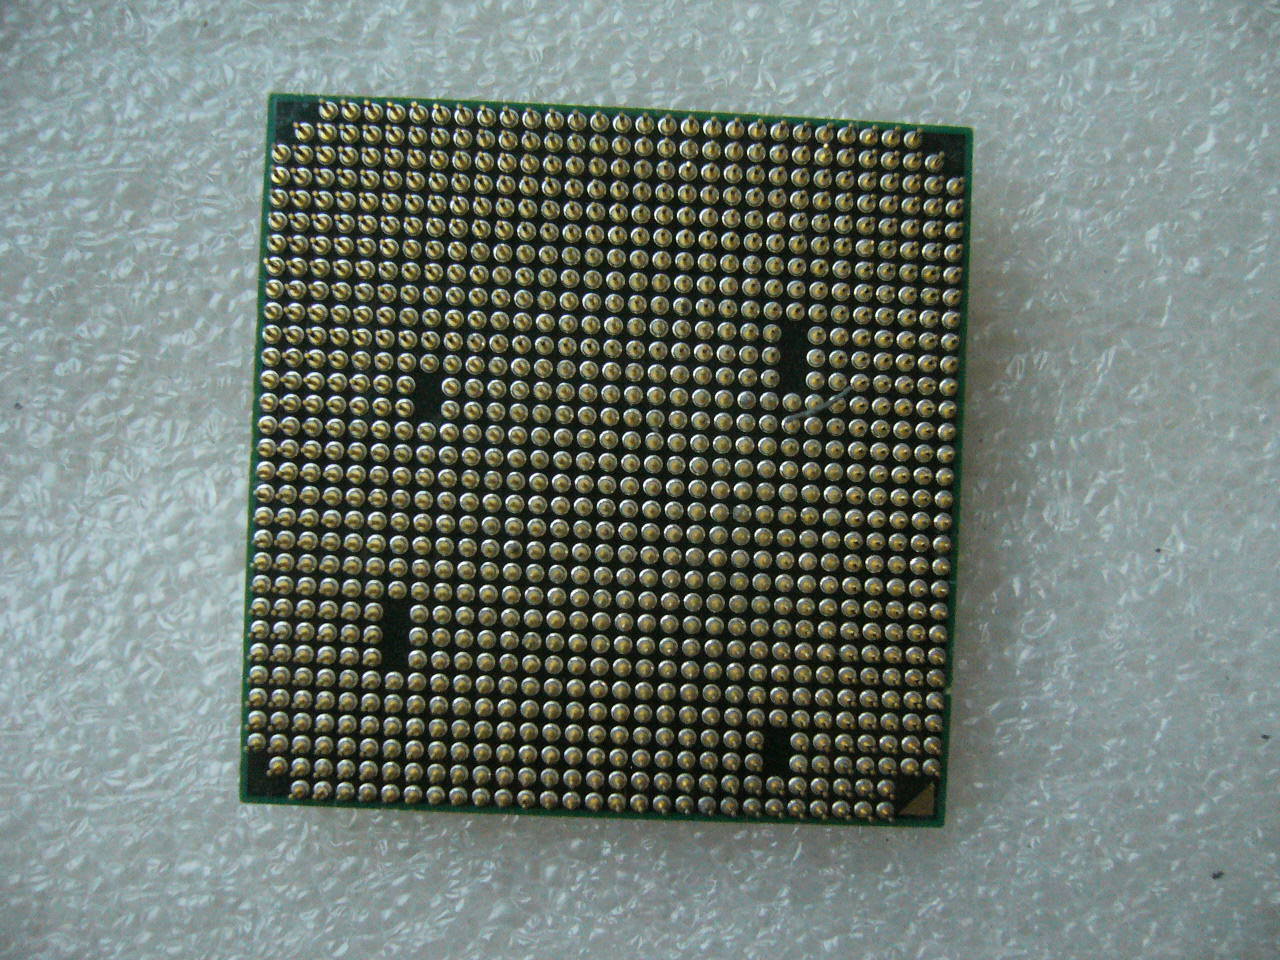 QTY 1x AMD Athlon II X2 260u 1.8 GHz Dual-Core (AD260USCK23GM) CPU AM3 25W - Click Image to Close